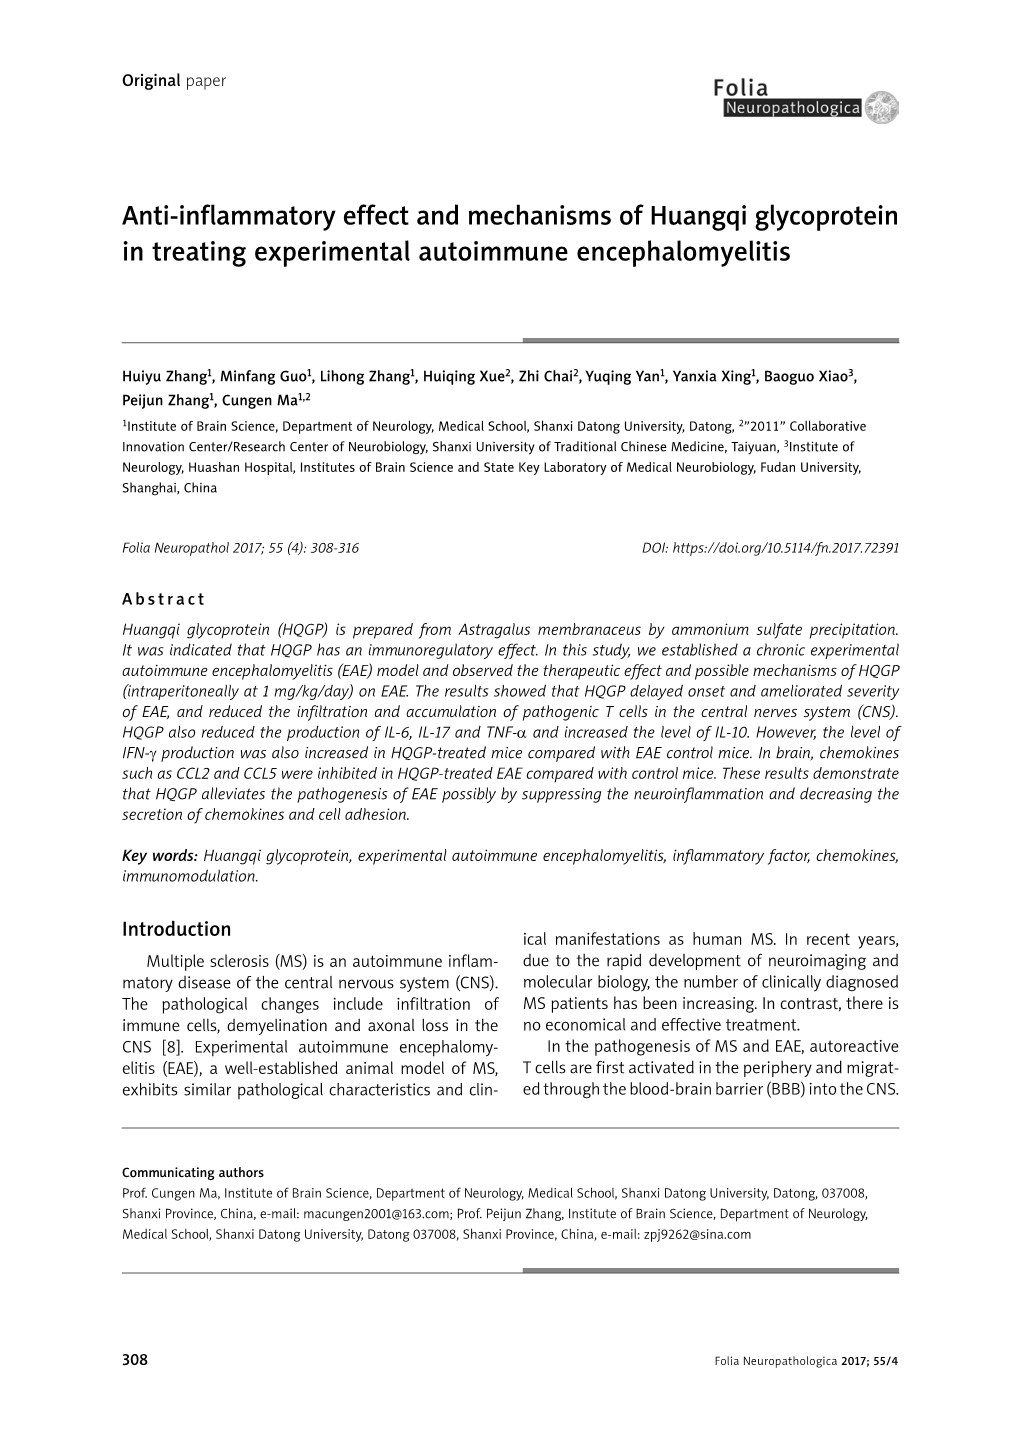 Anti-Inflammatory Effect and Mechanisms of Huangqi Glycoprotein in Treating Experimental Autoimmune Encephalomyelitis